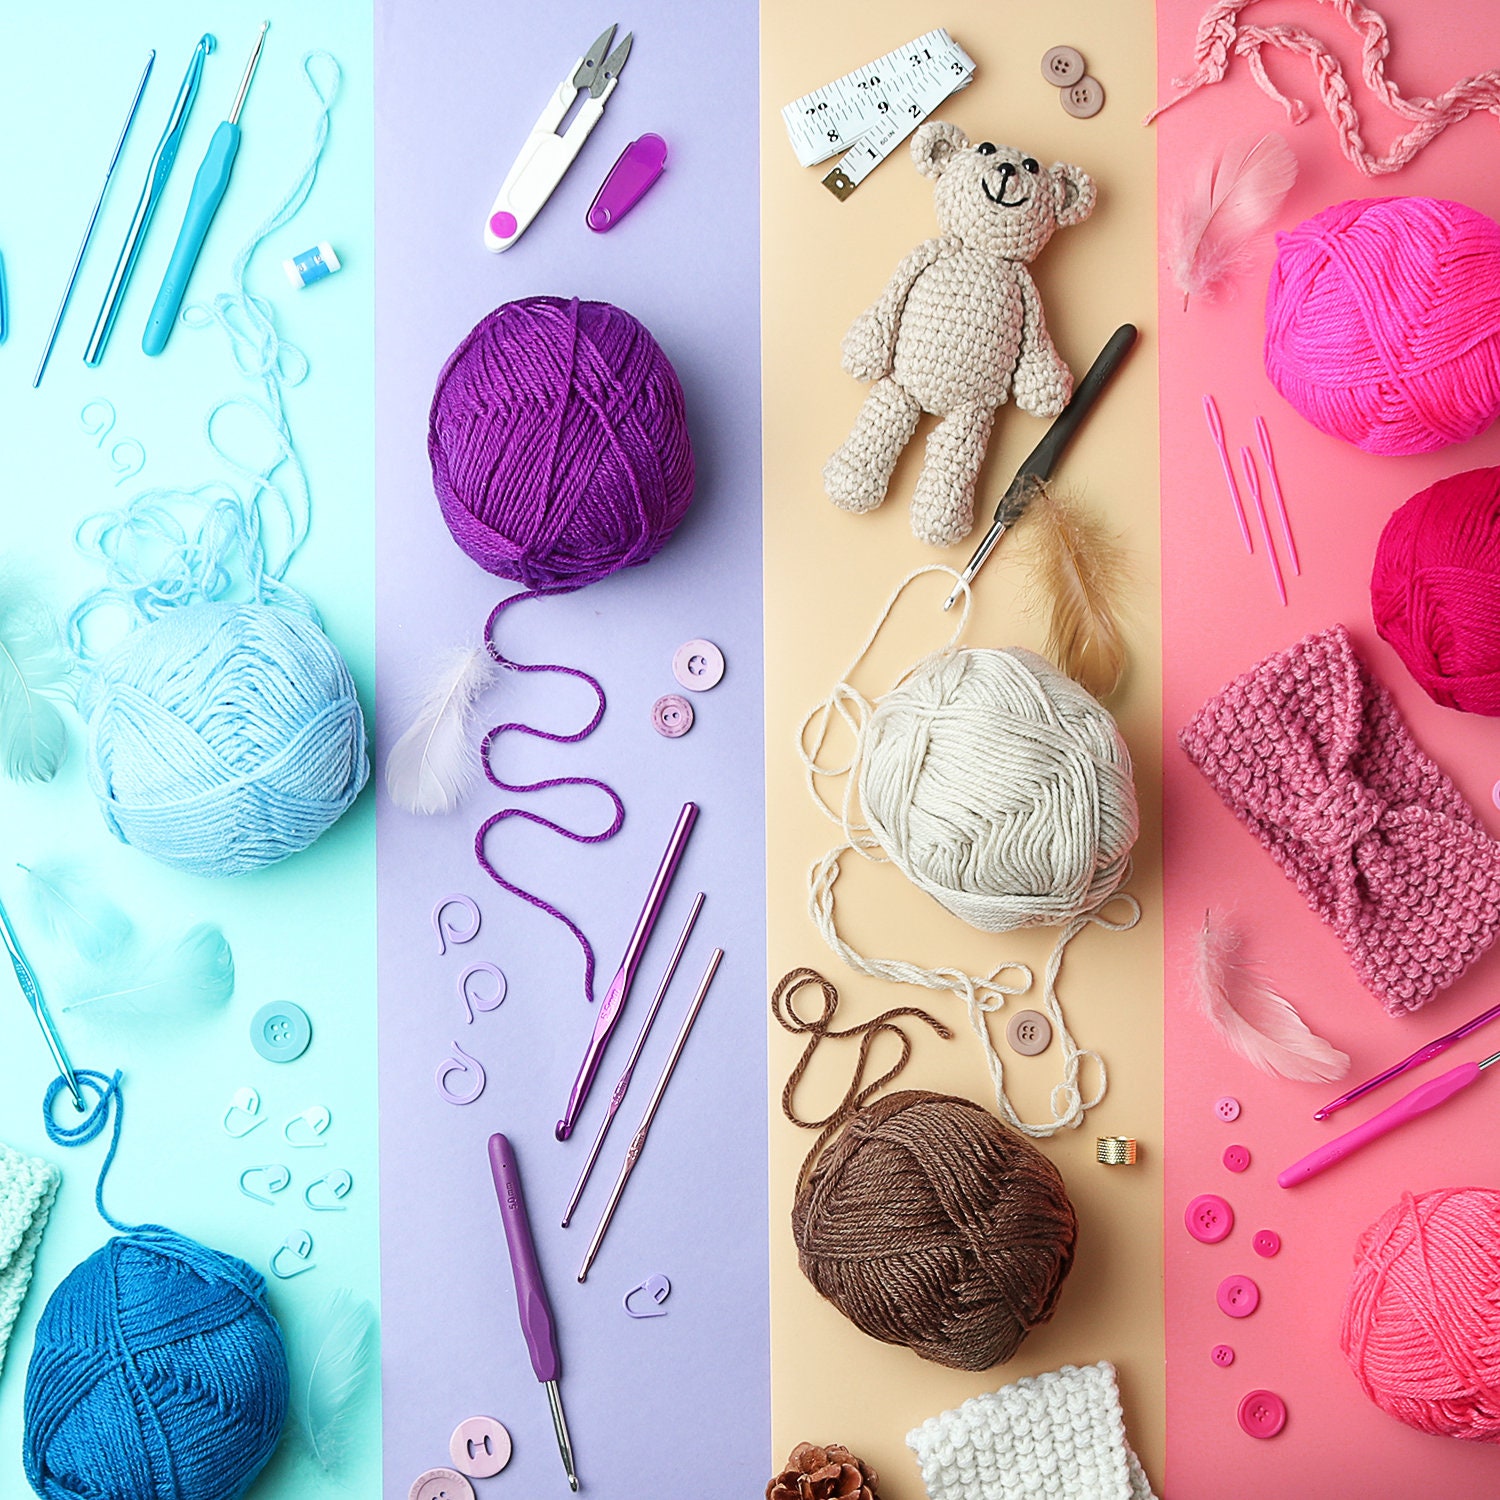  Crochet Hooks Set, Crochet Gifts Yarnology Crochet Hooks Crochet  Supplies Beginner Crochet Kit for Grandmothers for Home for Moms for Kids